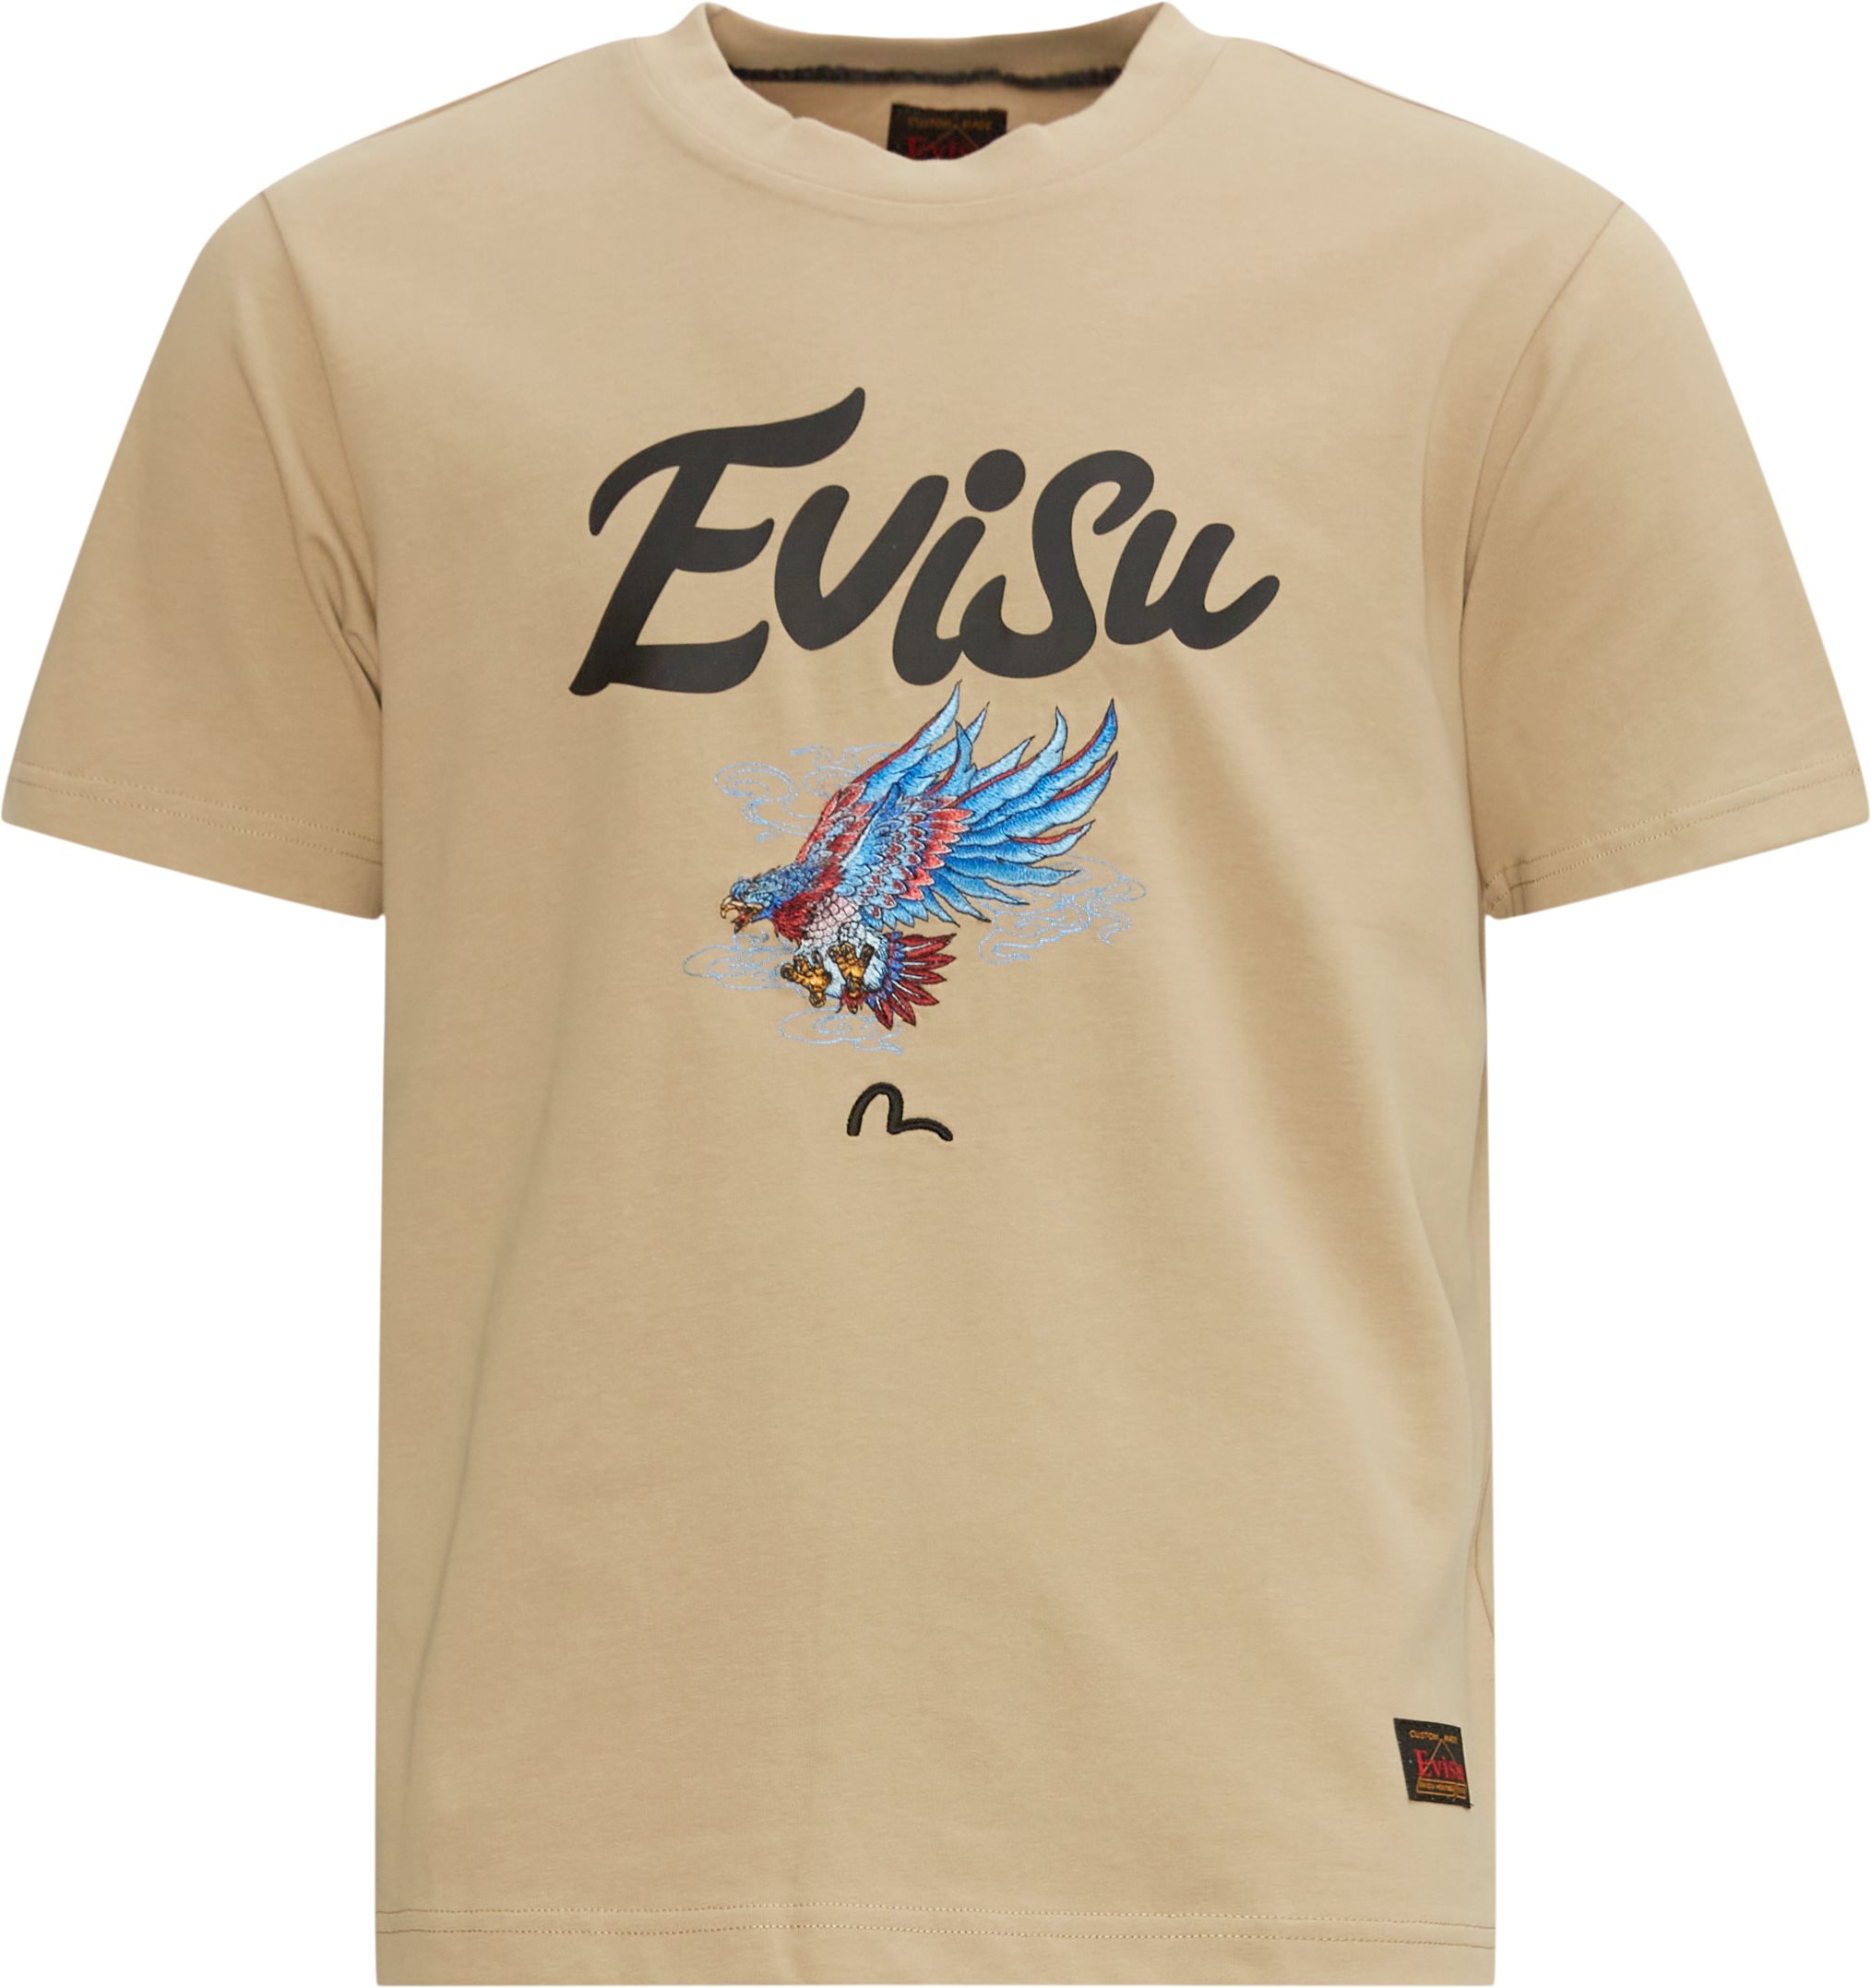 2ESHTM3TS518XXCTC T-shirts SAND from EVISU 80 EUR